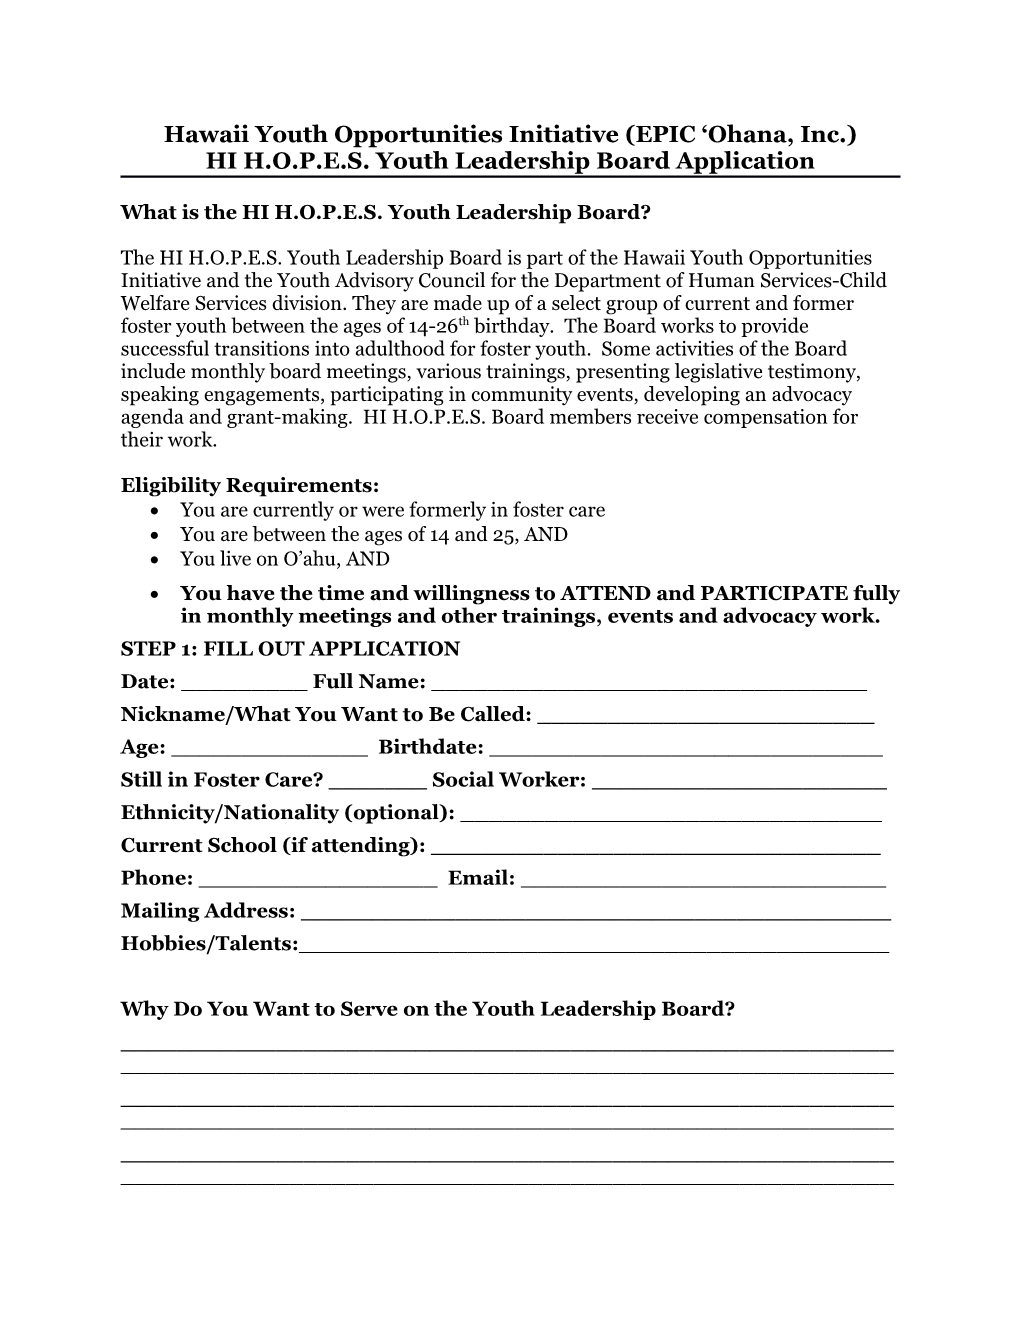 Hawaii Youth Opportunities Initiative (EPIC Ohana, Inc.)